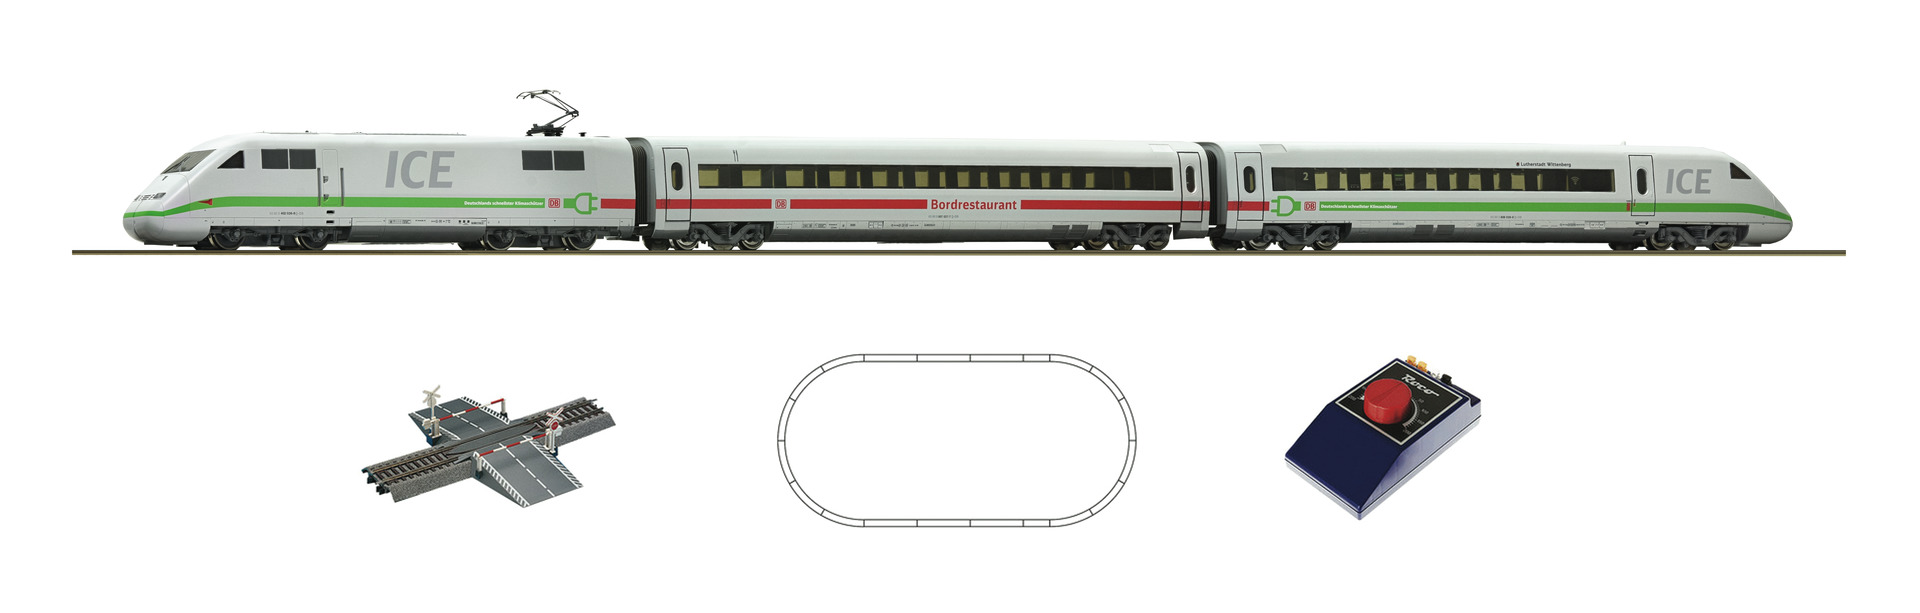 roco-51162-Analog-Startset-ICE-2-DB-AG-Grundpackung-Modelleisenbahn